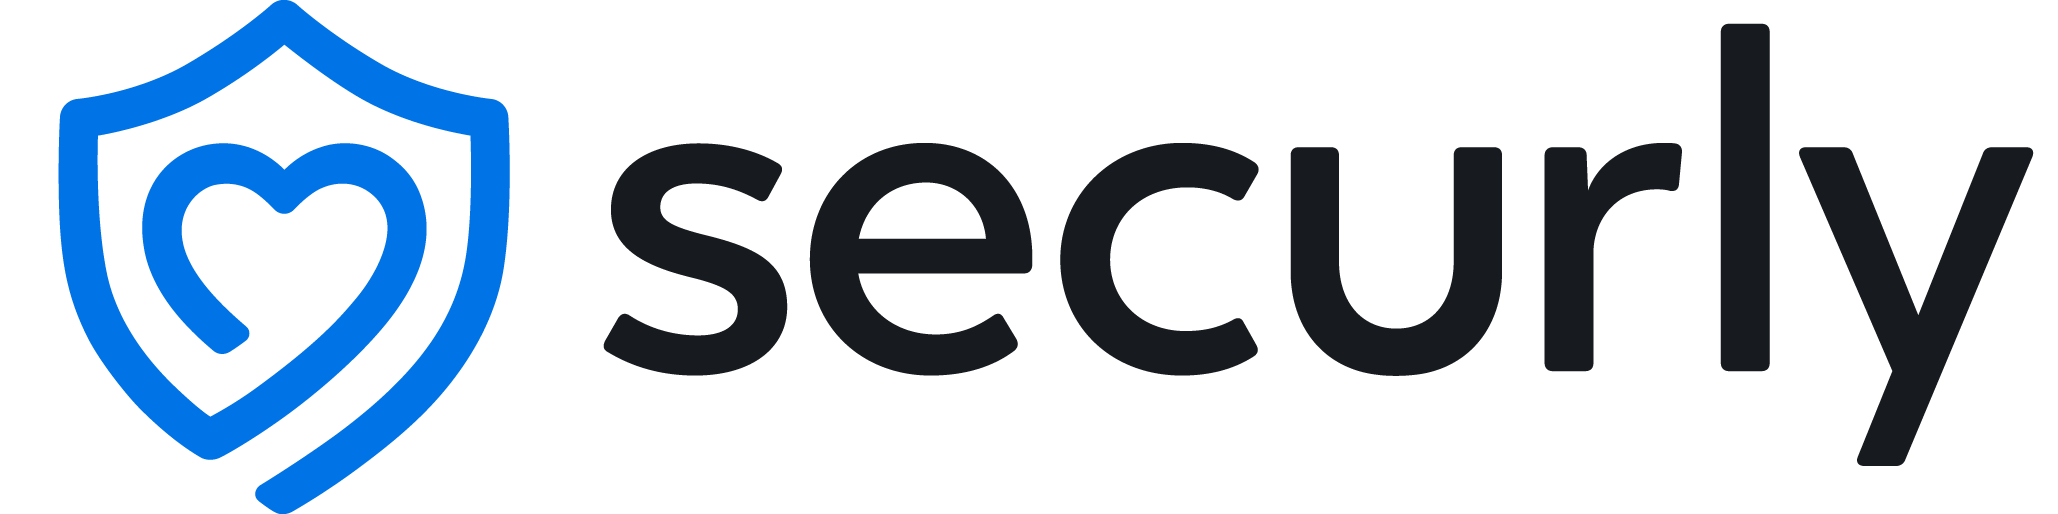 Securly, Inc. logo